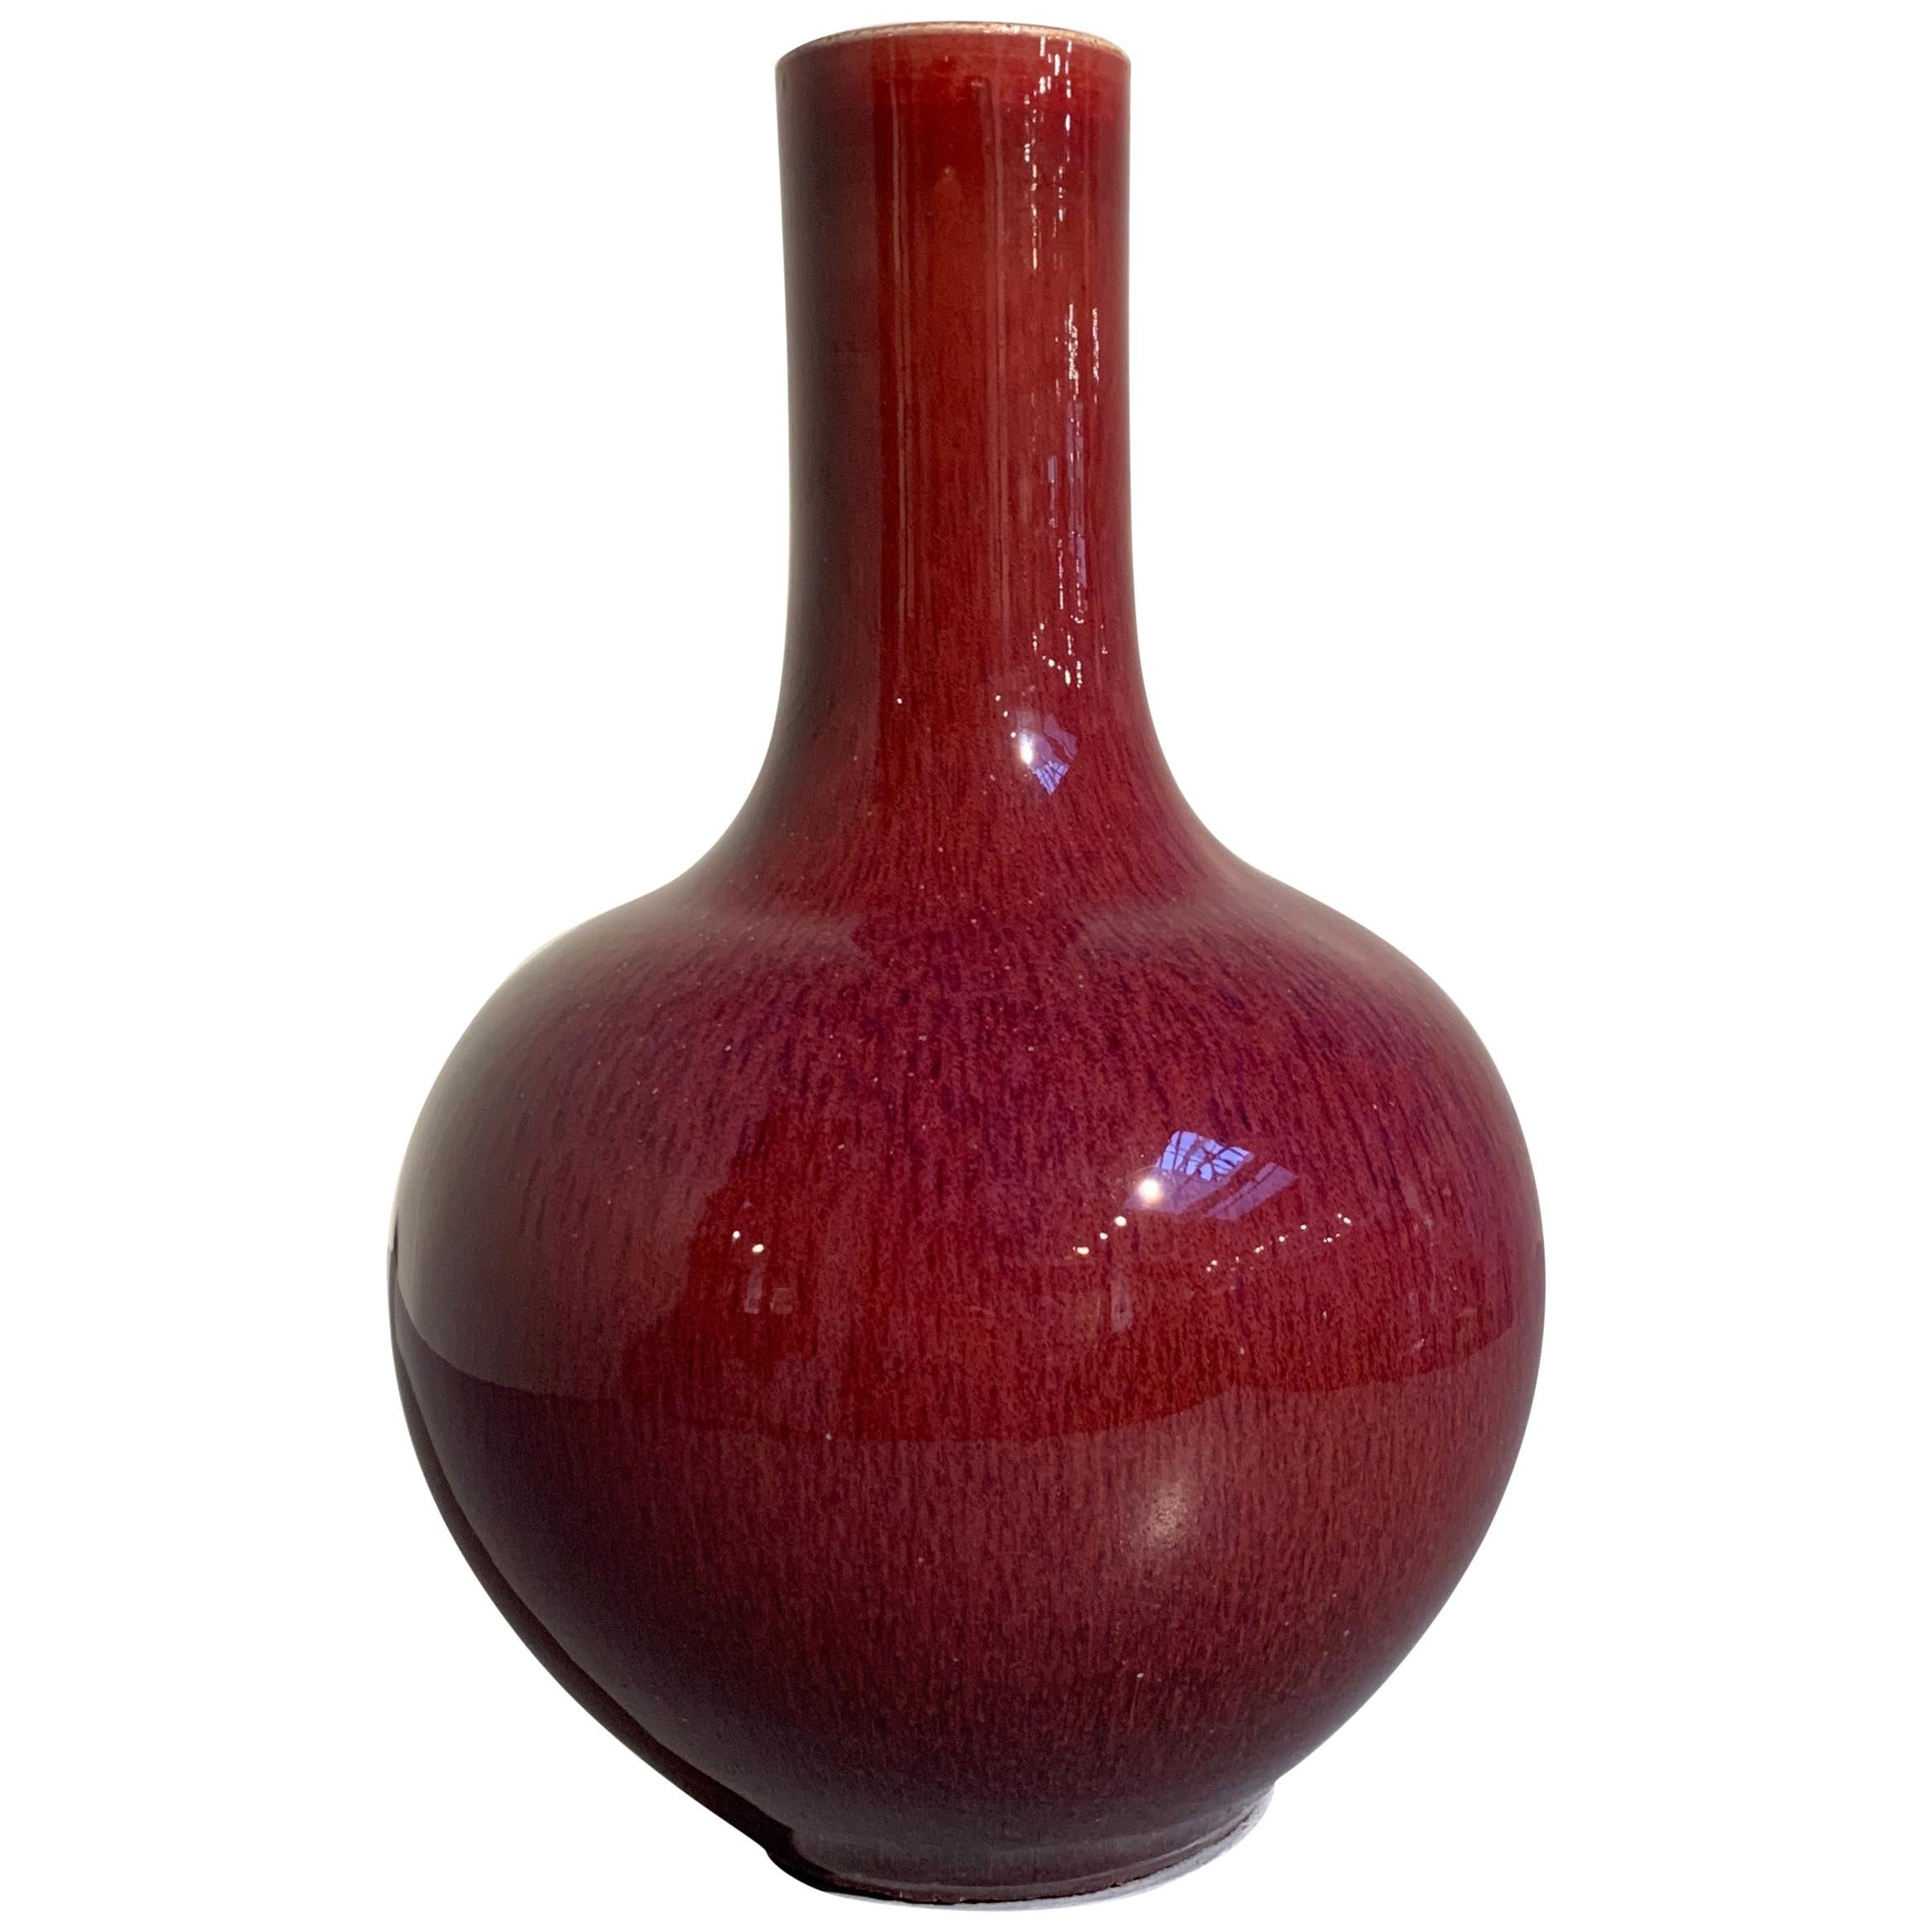 Chinese Oxblood Langyao Glazed Bottle Vase, Tianquiping, Qing Dynasty